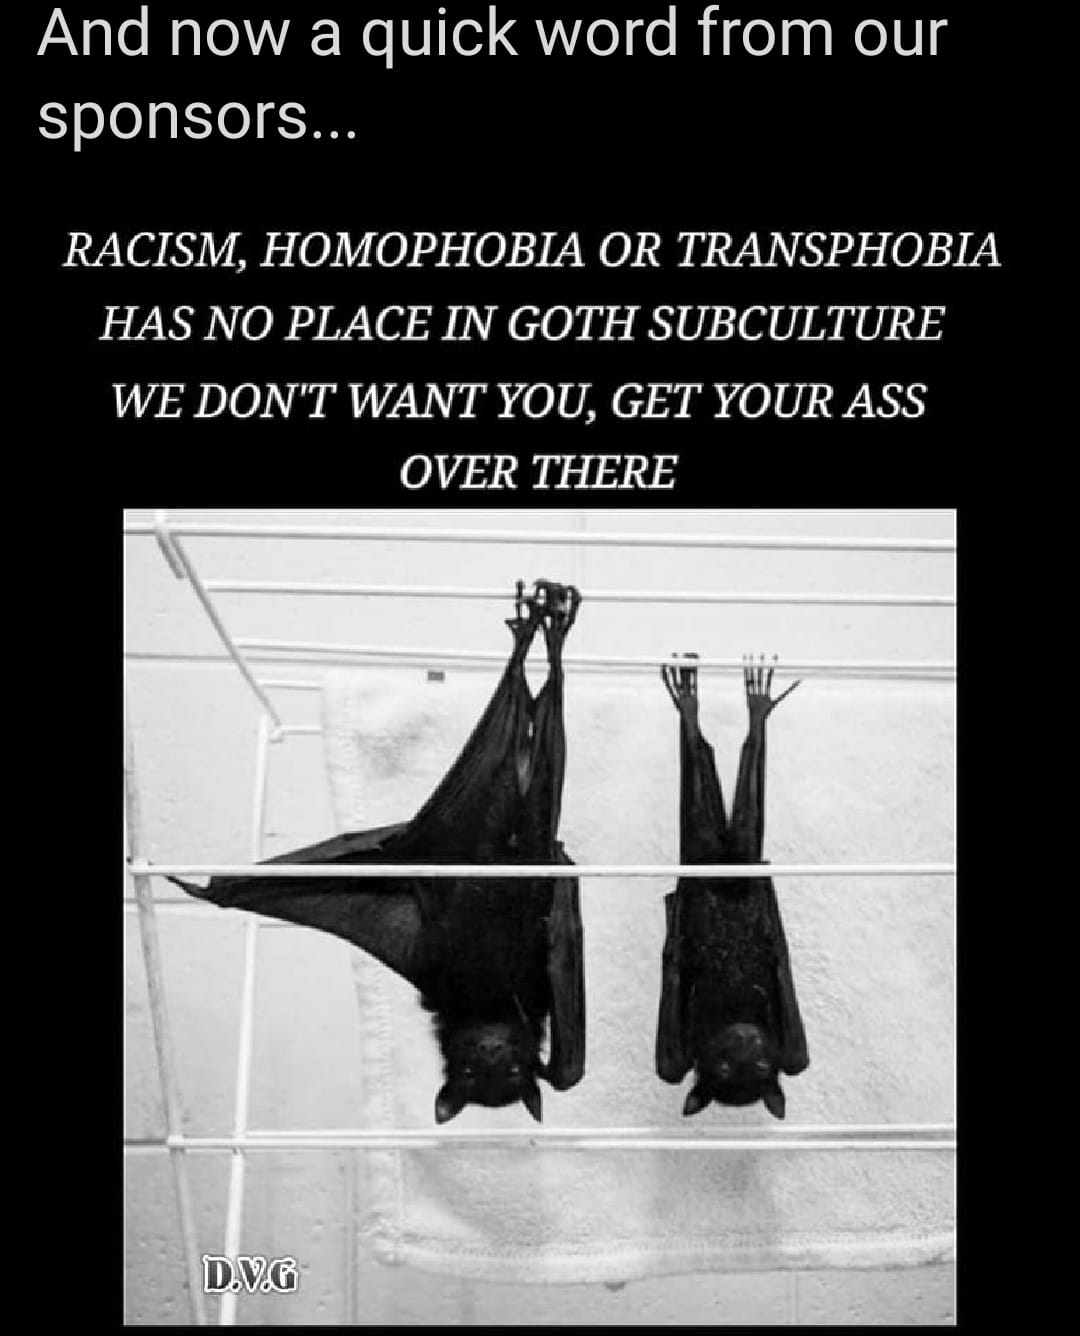 goths-against-racism-homophobia-misoginy